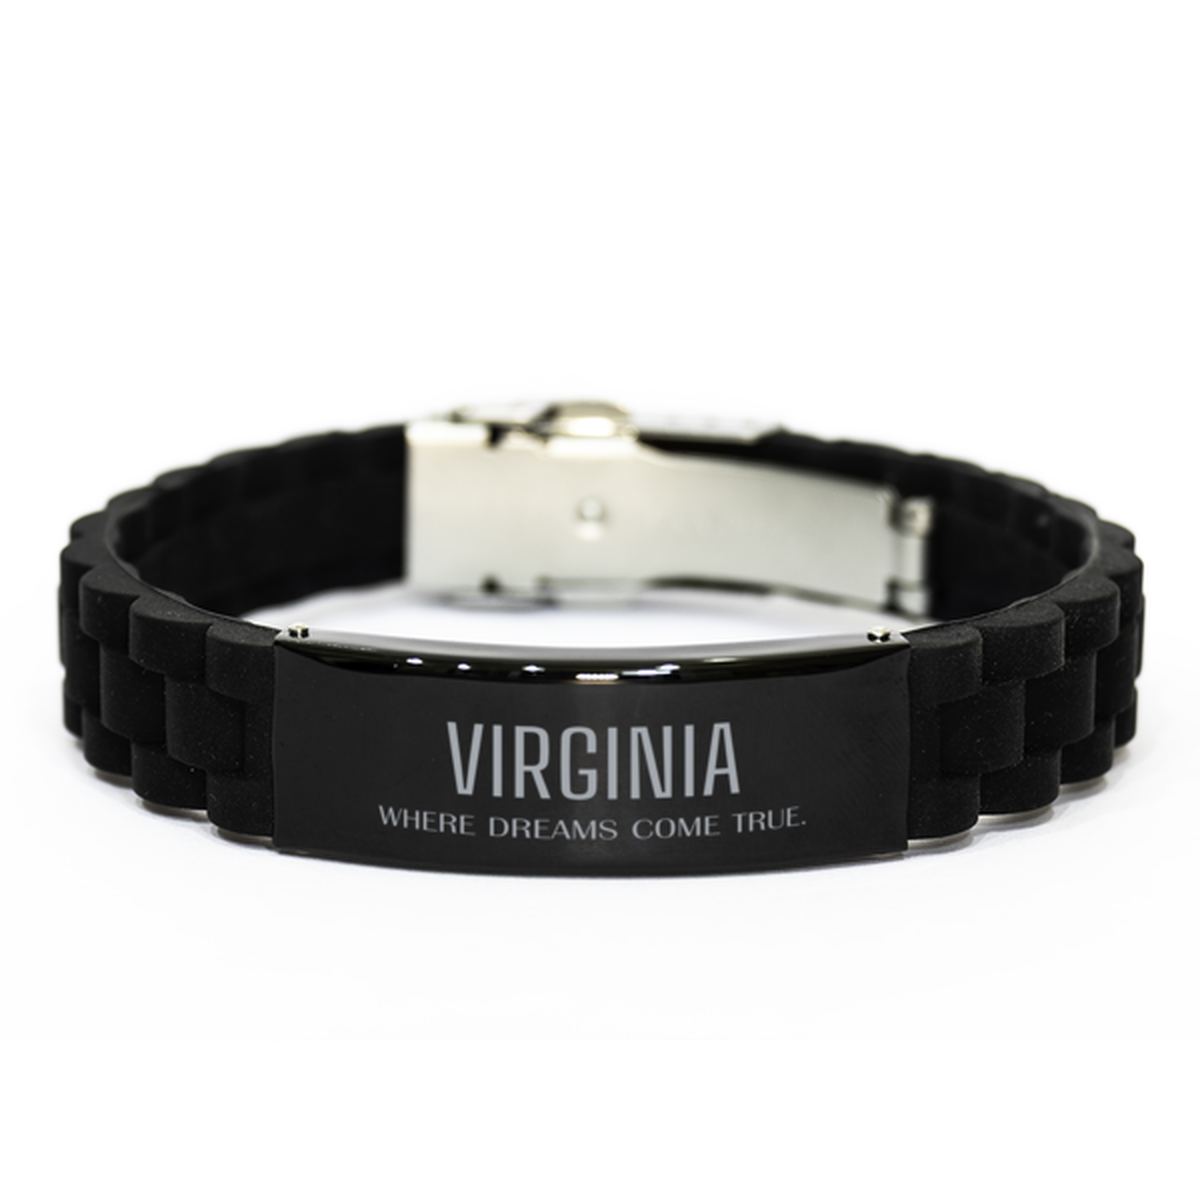 Love Virginia State Black Glidelock Clasp Bracelet, Virginia Where dreams come true, Birthday Inspirational Gifts For Virginia Men, Women, Friends